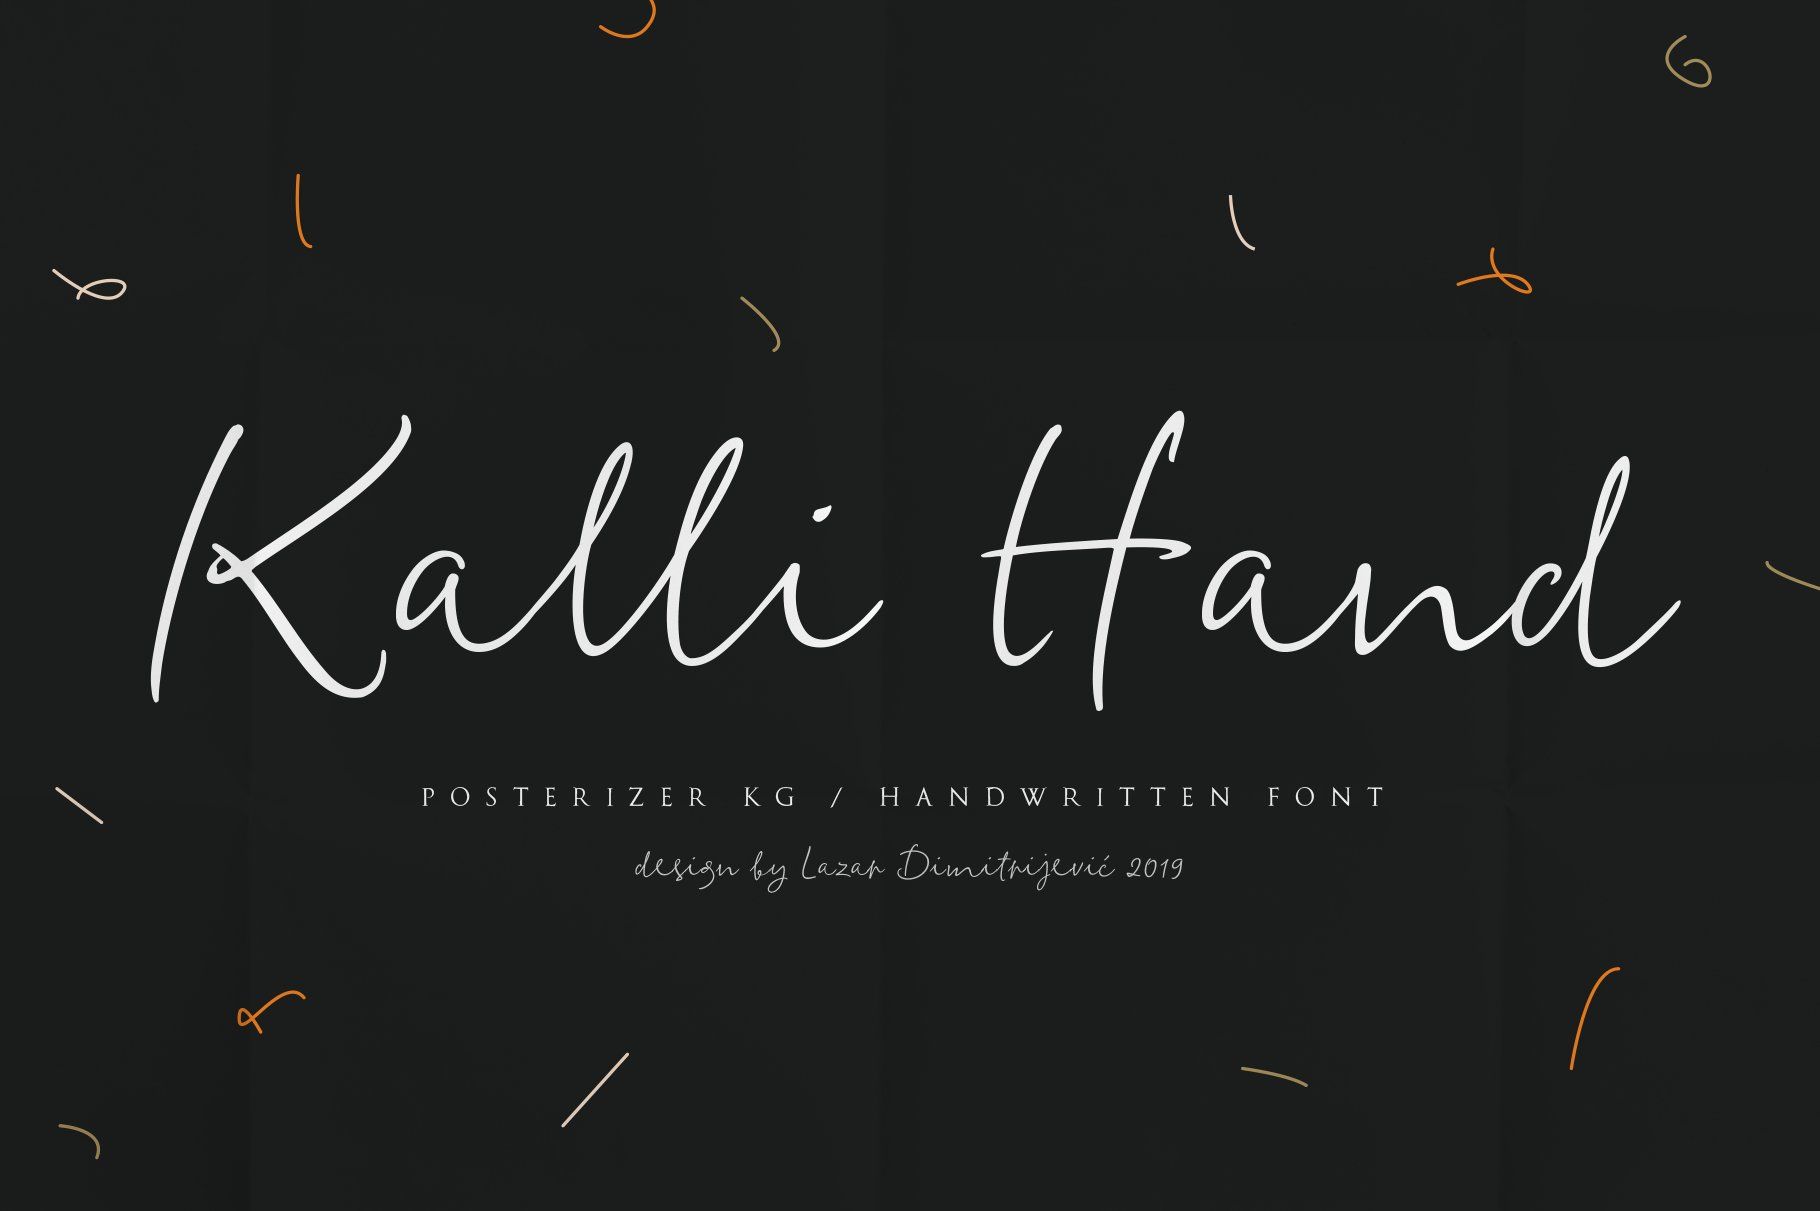 Kalli Hand Script By Posterizer Kg On Creativemarket